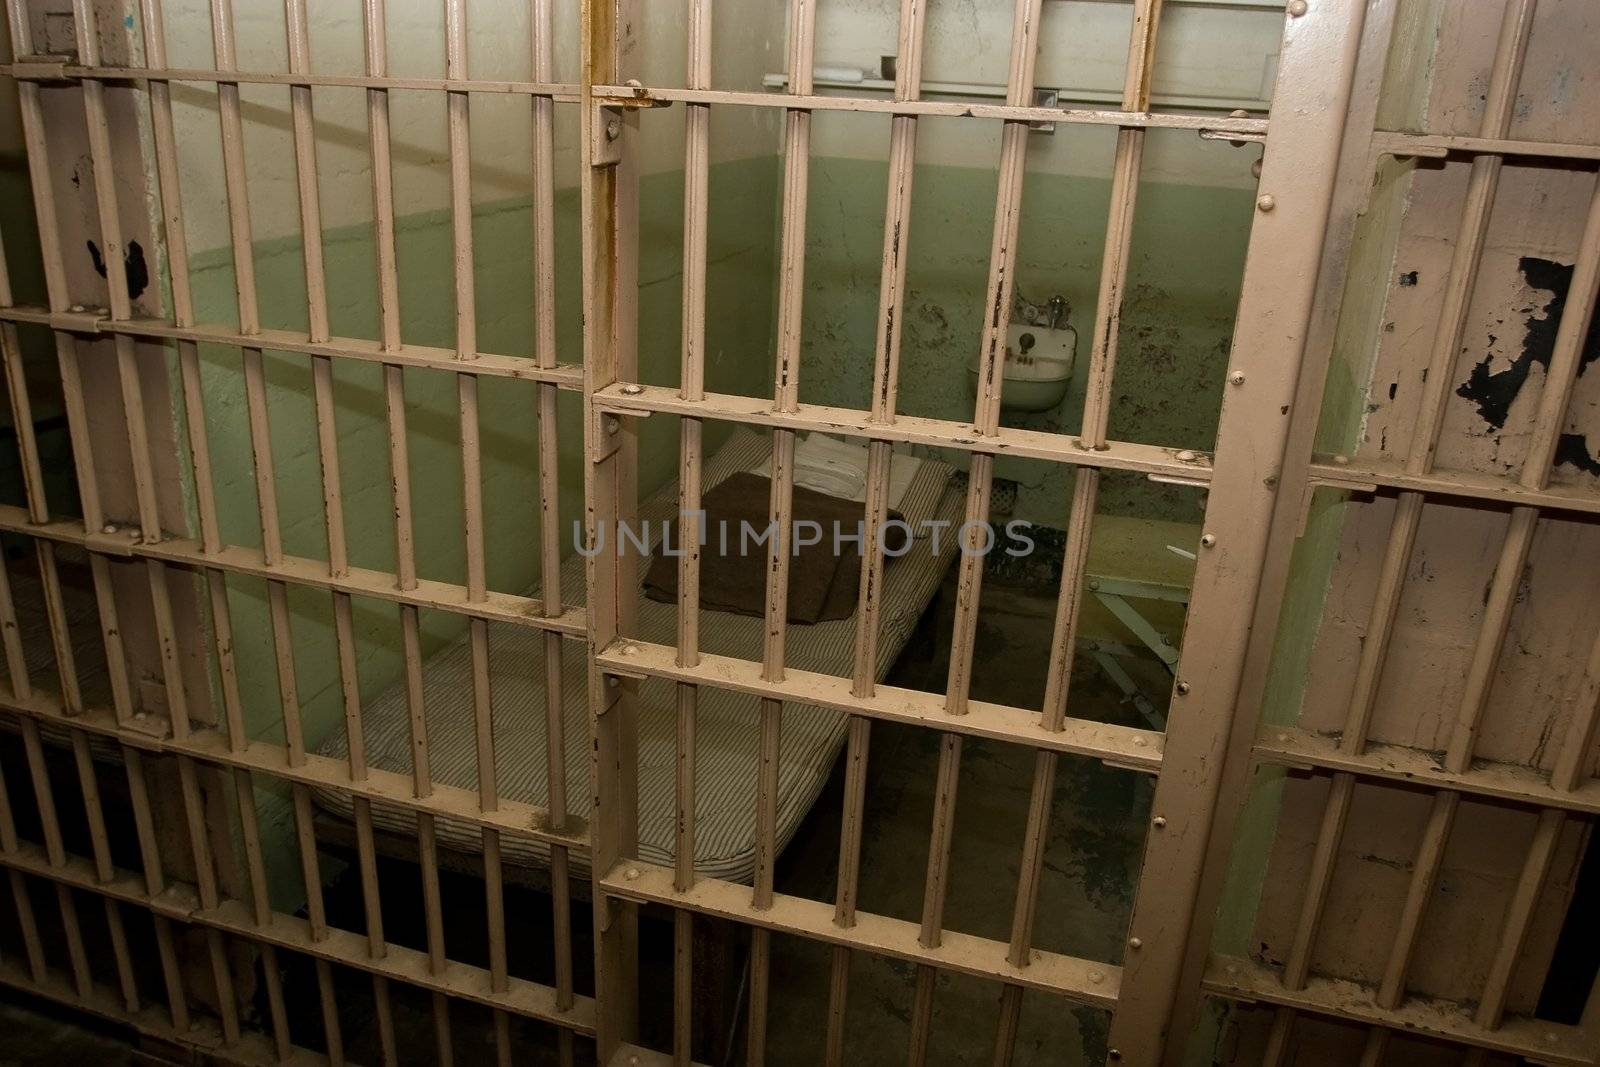 Alcatraz Prison by melastmohican